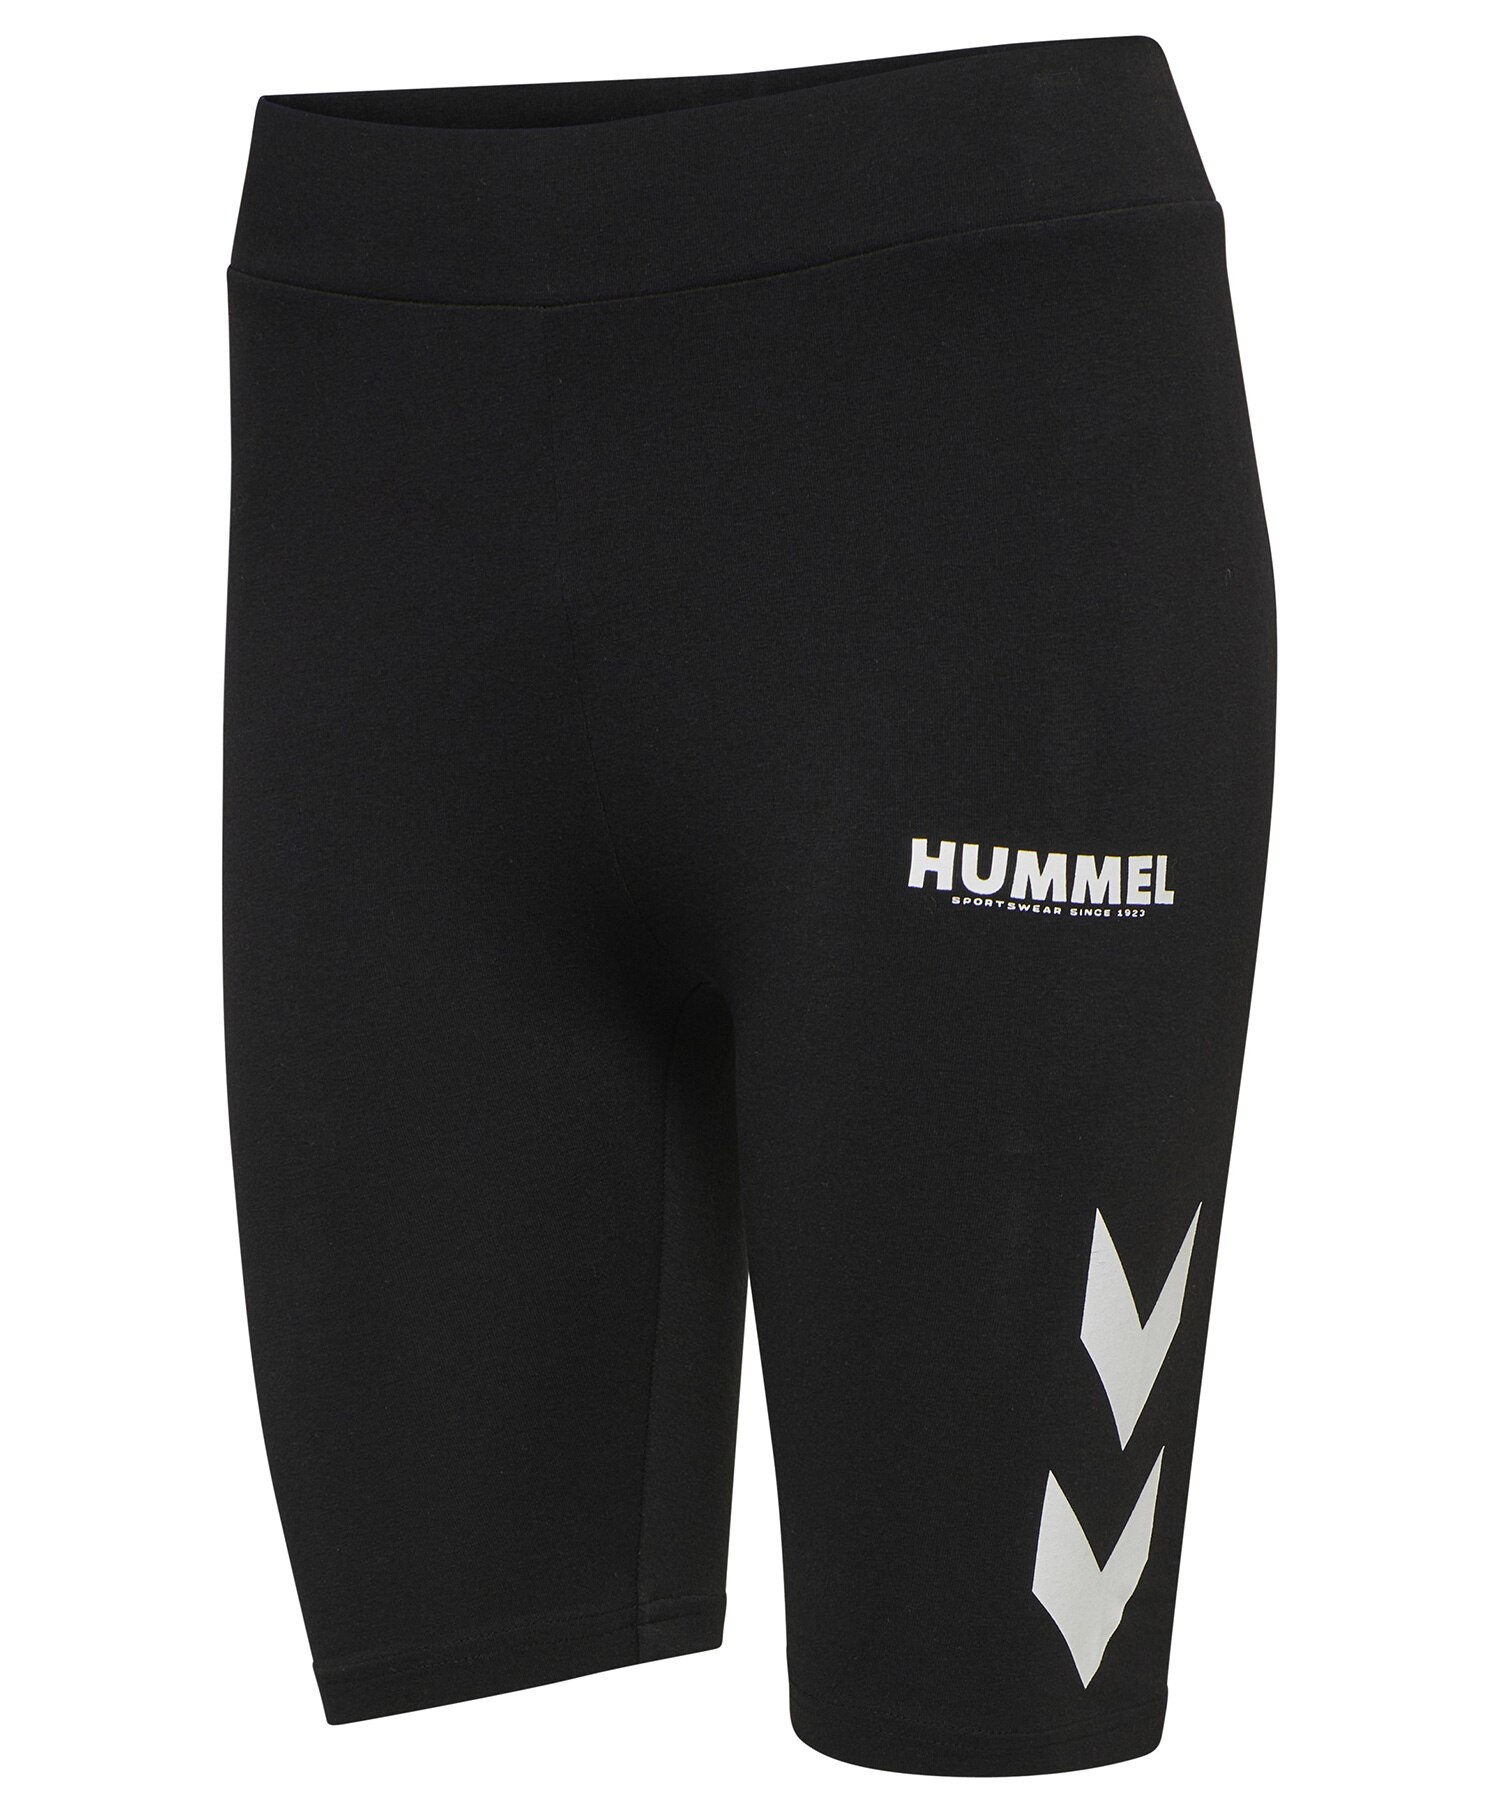 Hummel LEGACY Tight shorts